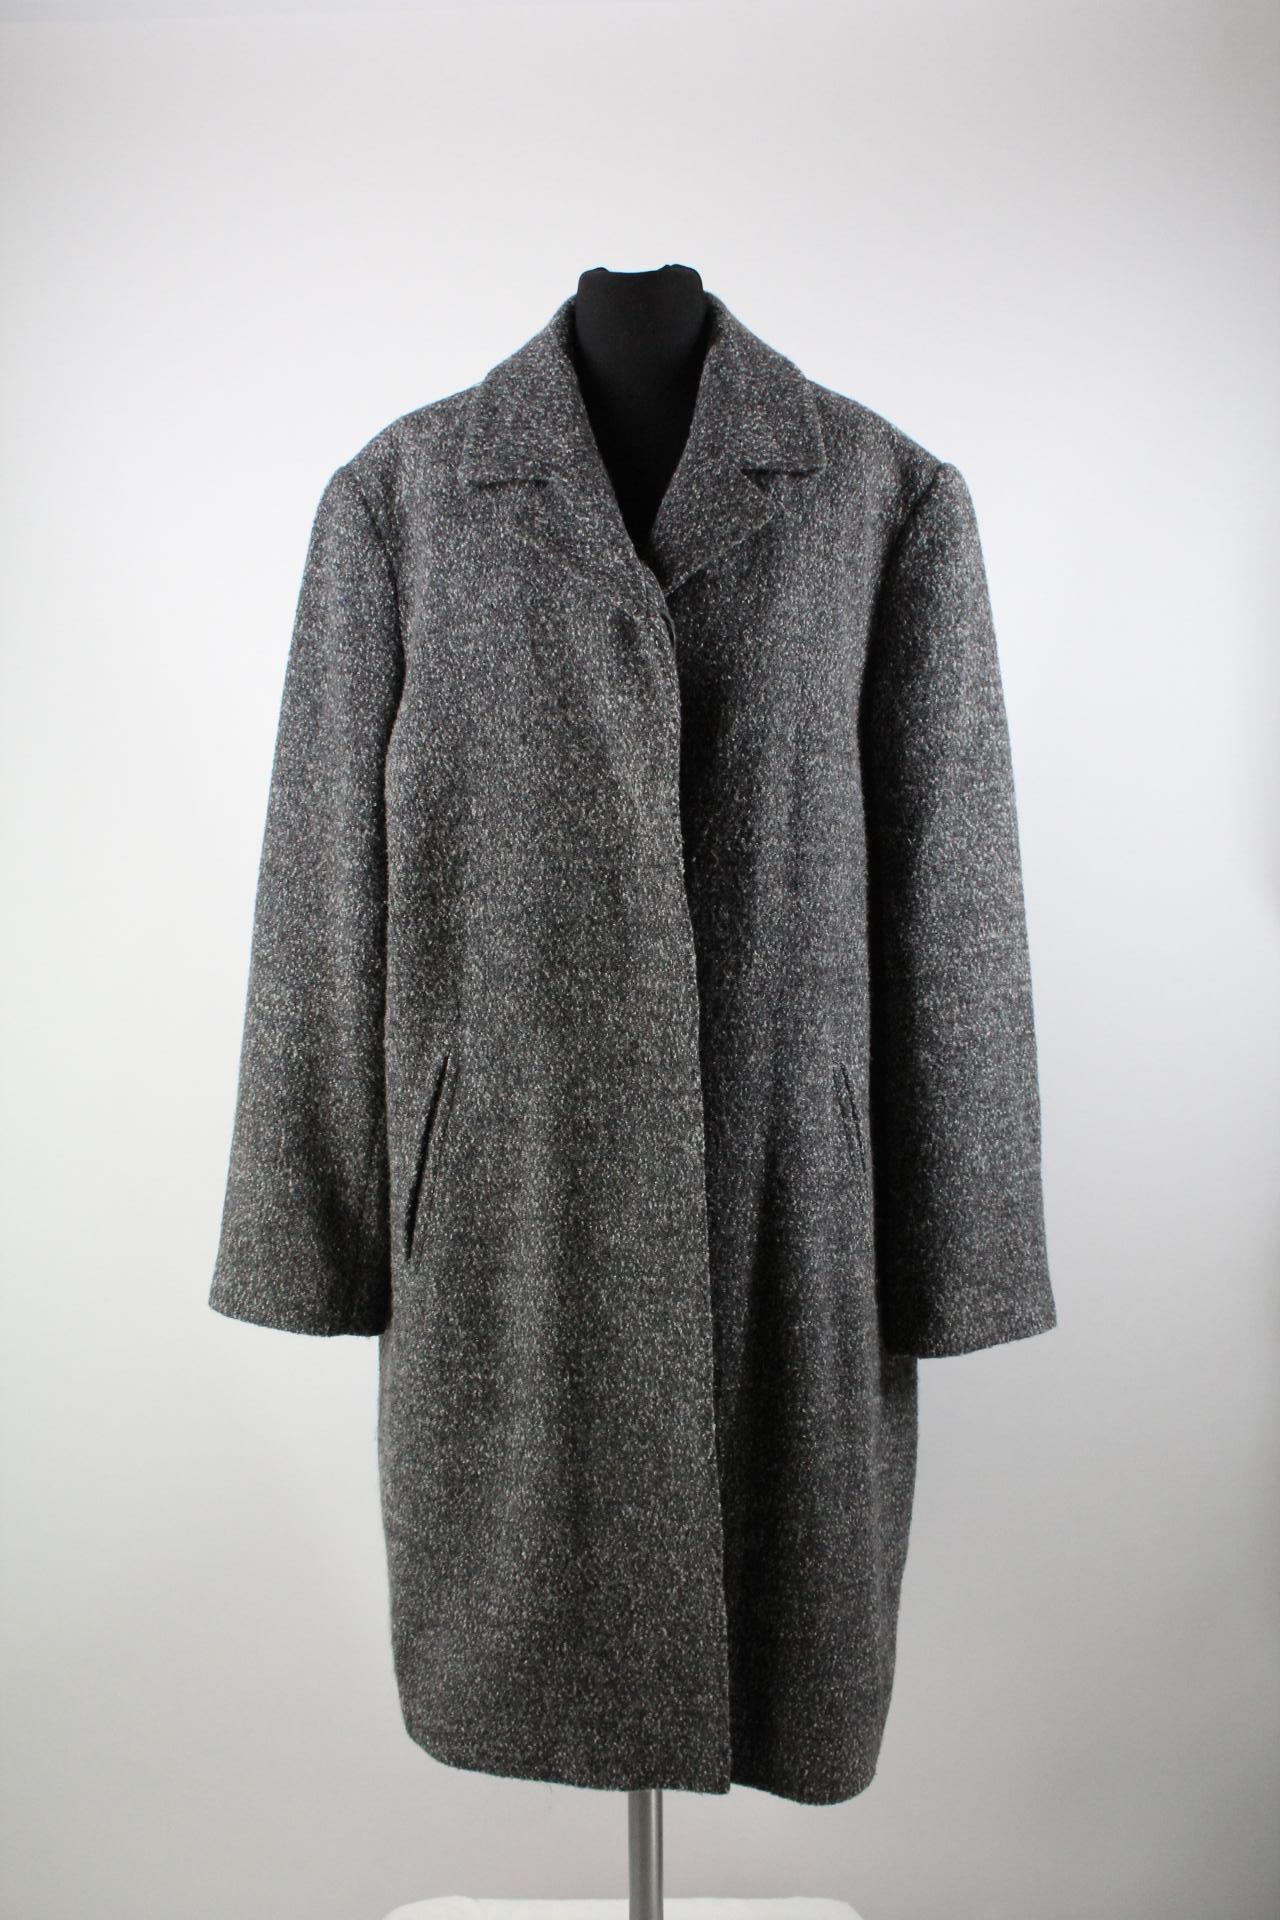 Pure City Wear Damen-Mantel schwarz/grau Größe 40